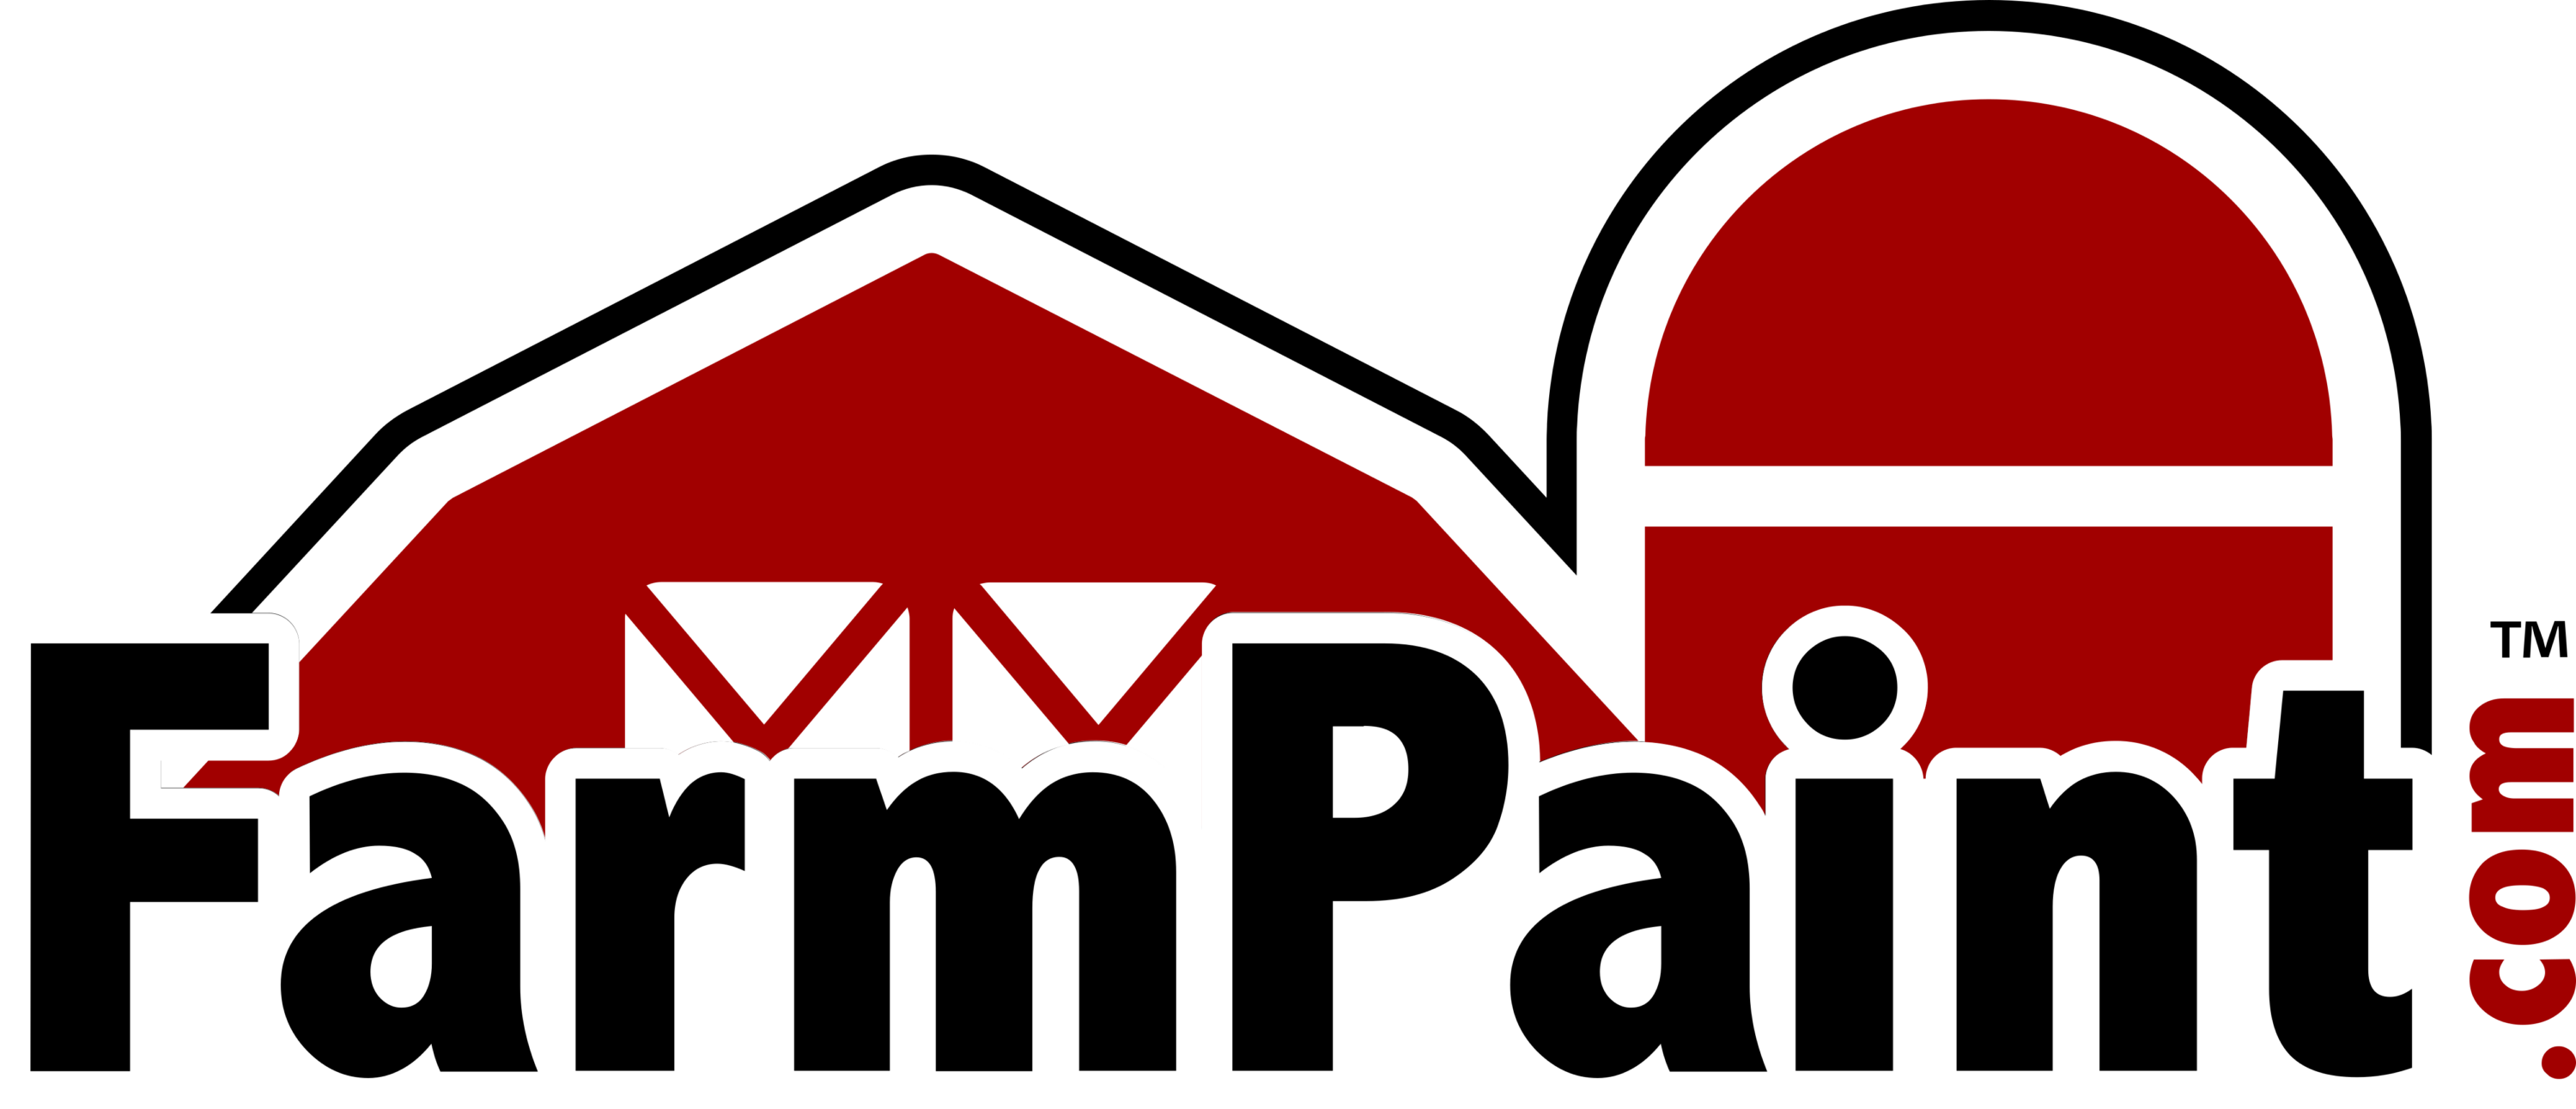 FarmPaint.com Logo